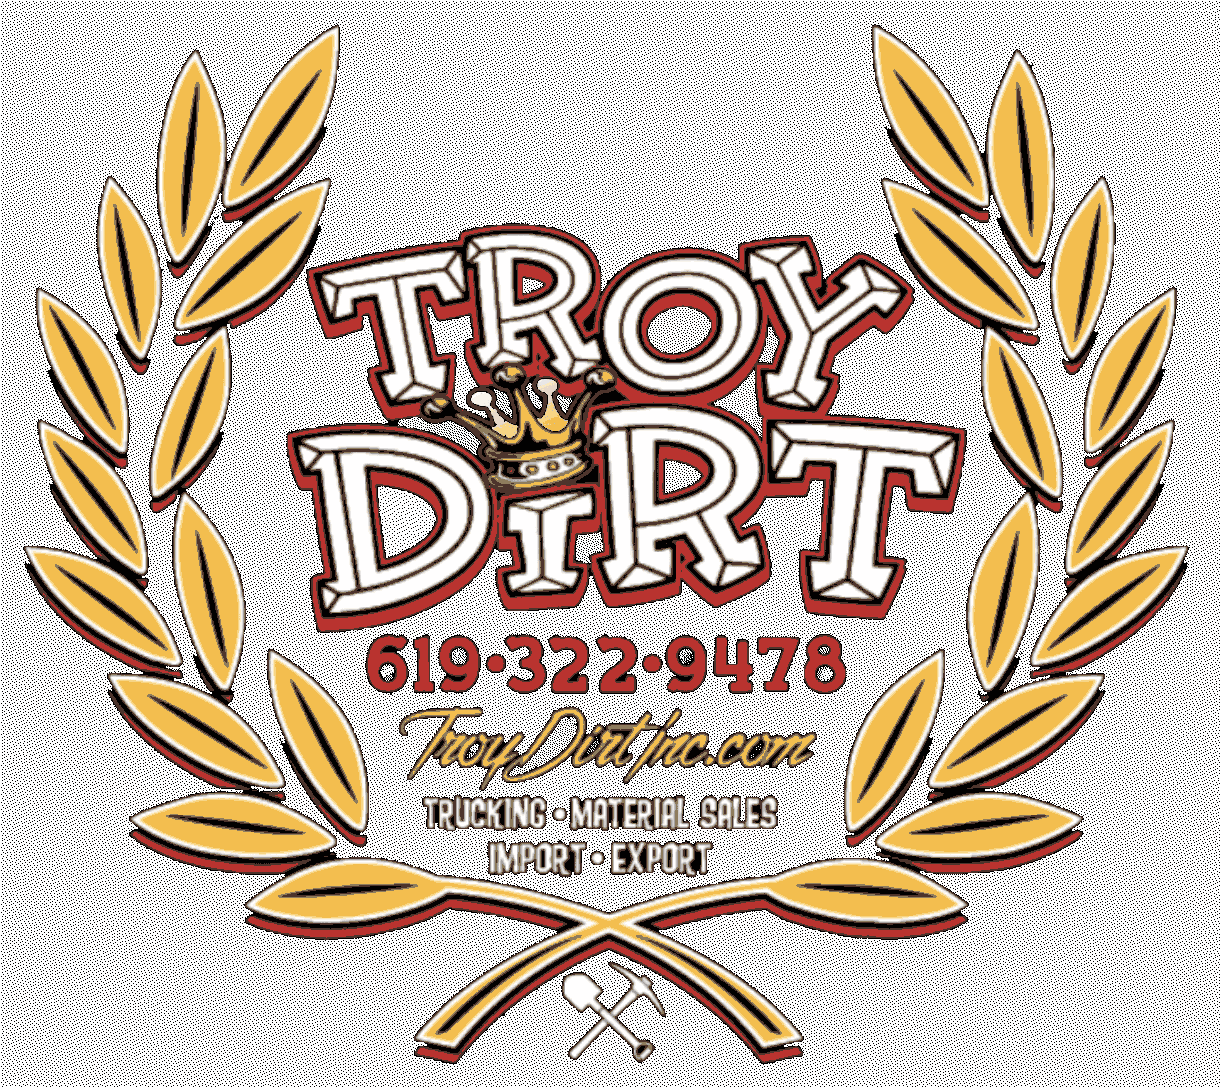 Troy Dirt Inc